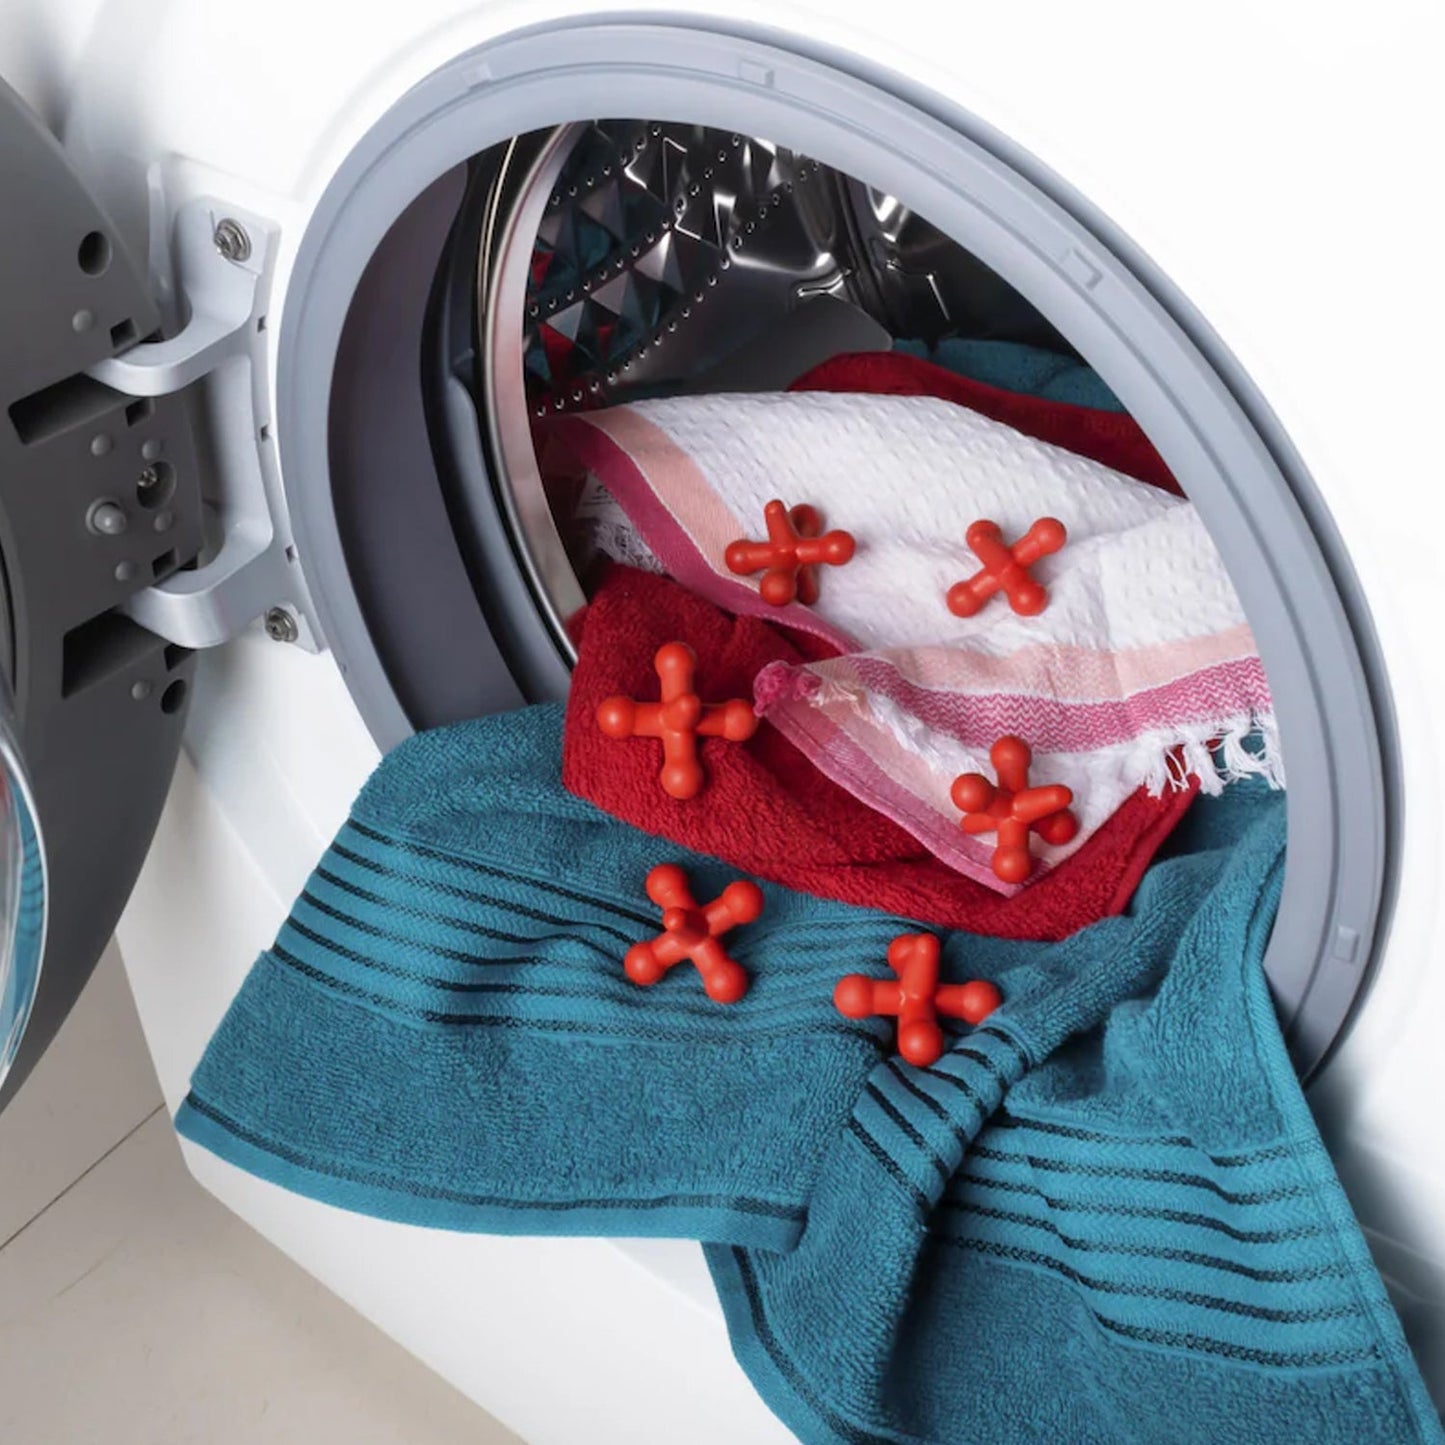 12533 Reusable Eco-Friendly Laundry Washing Balls for Washing Machine, Laundry dryer Ball (6 Pc Set)